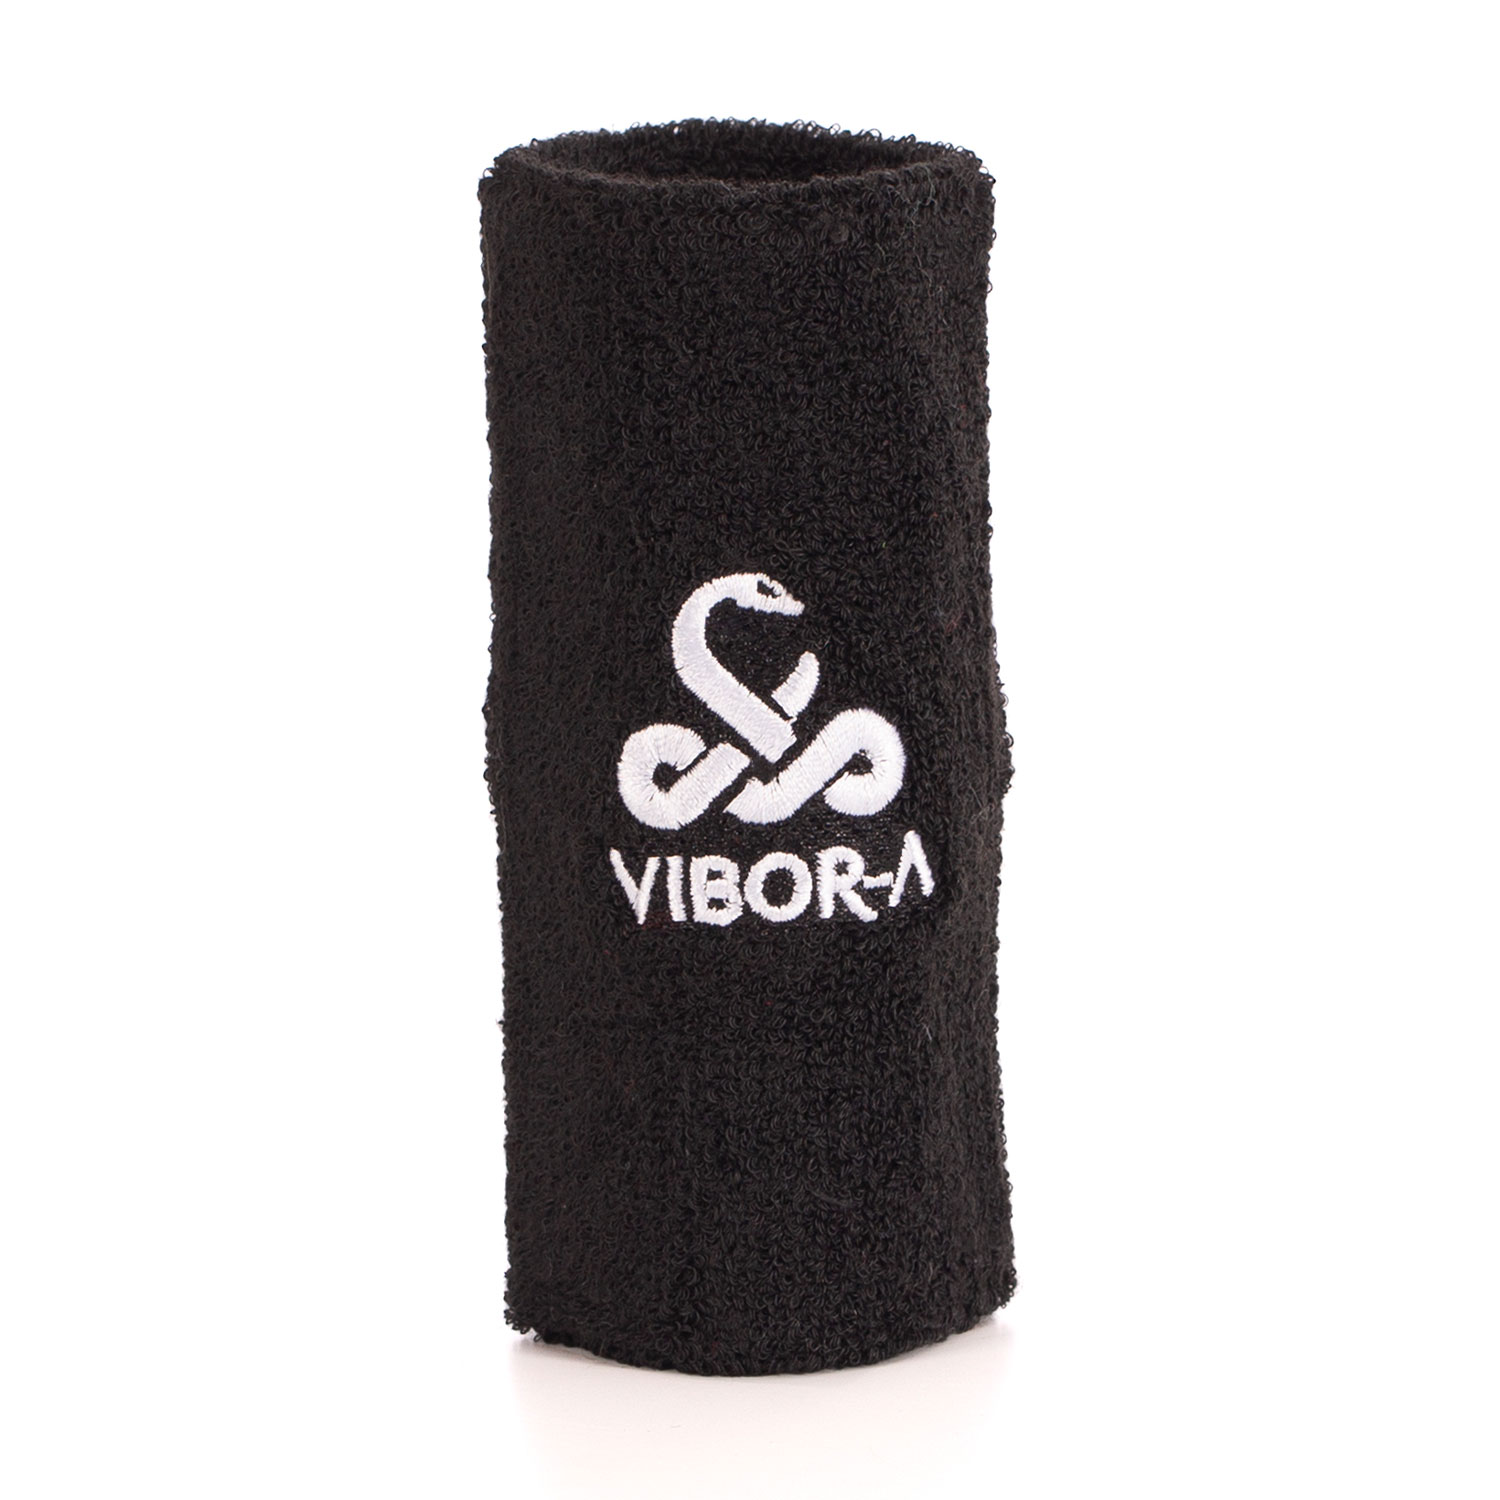 Vibor-A Ancha Long Wristband - Nero